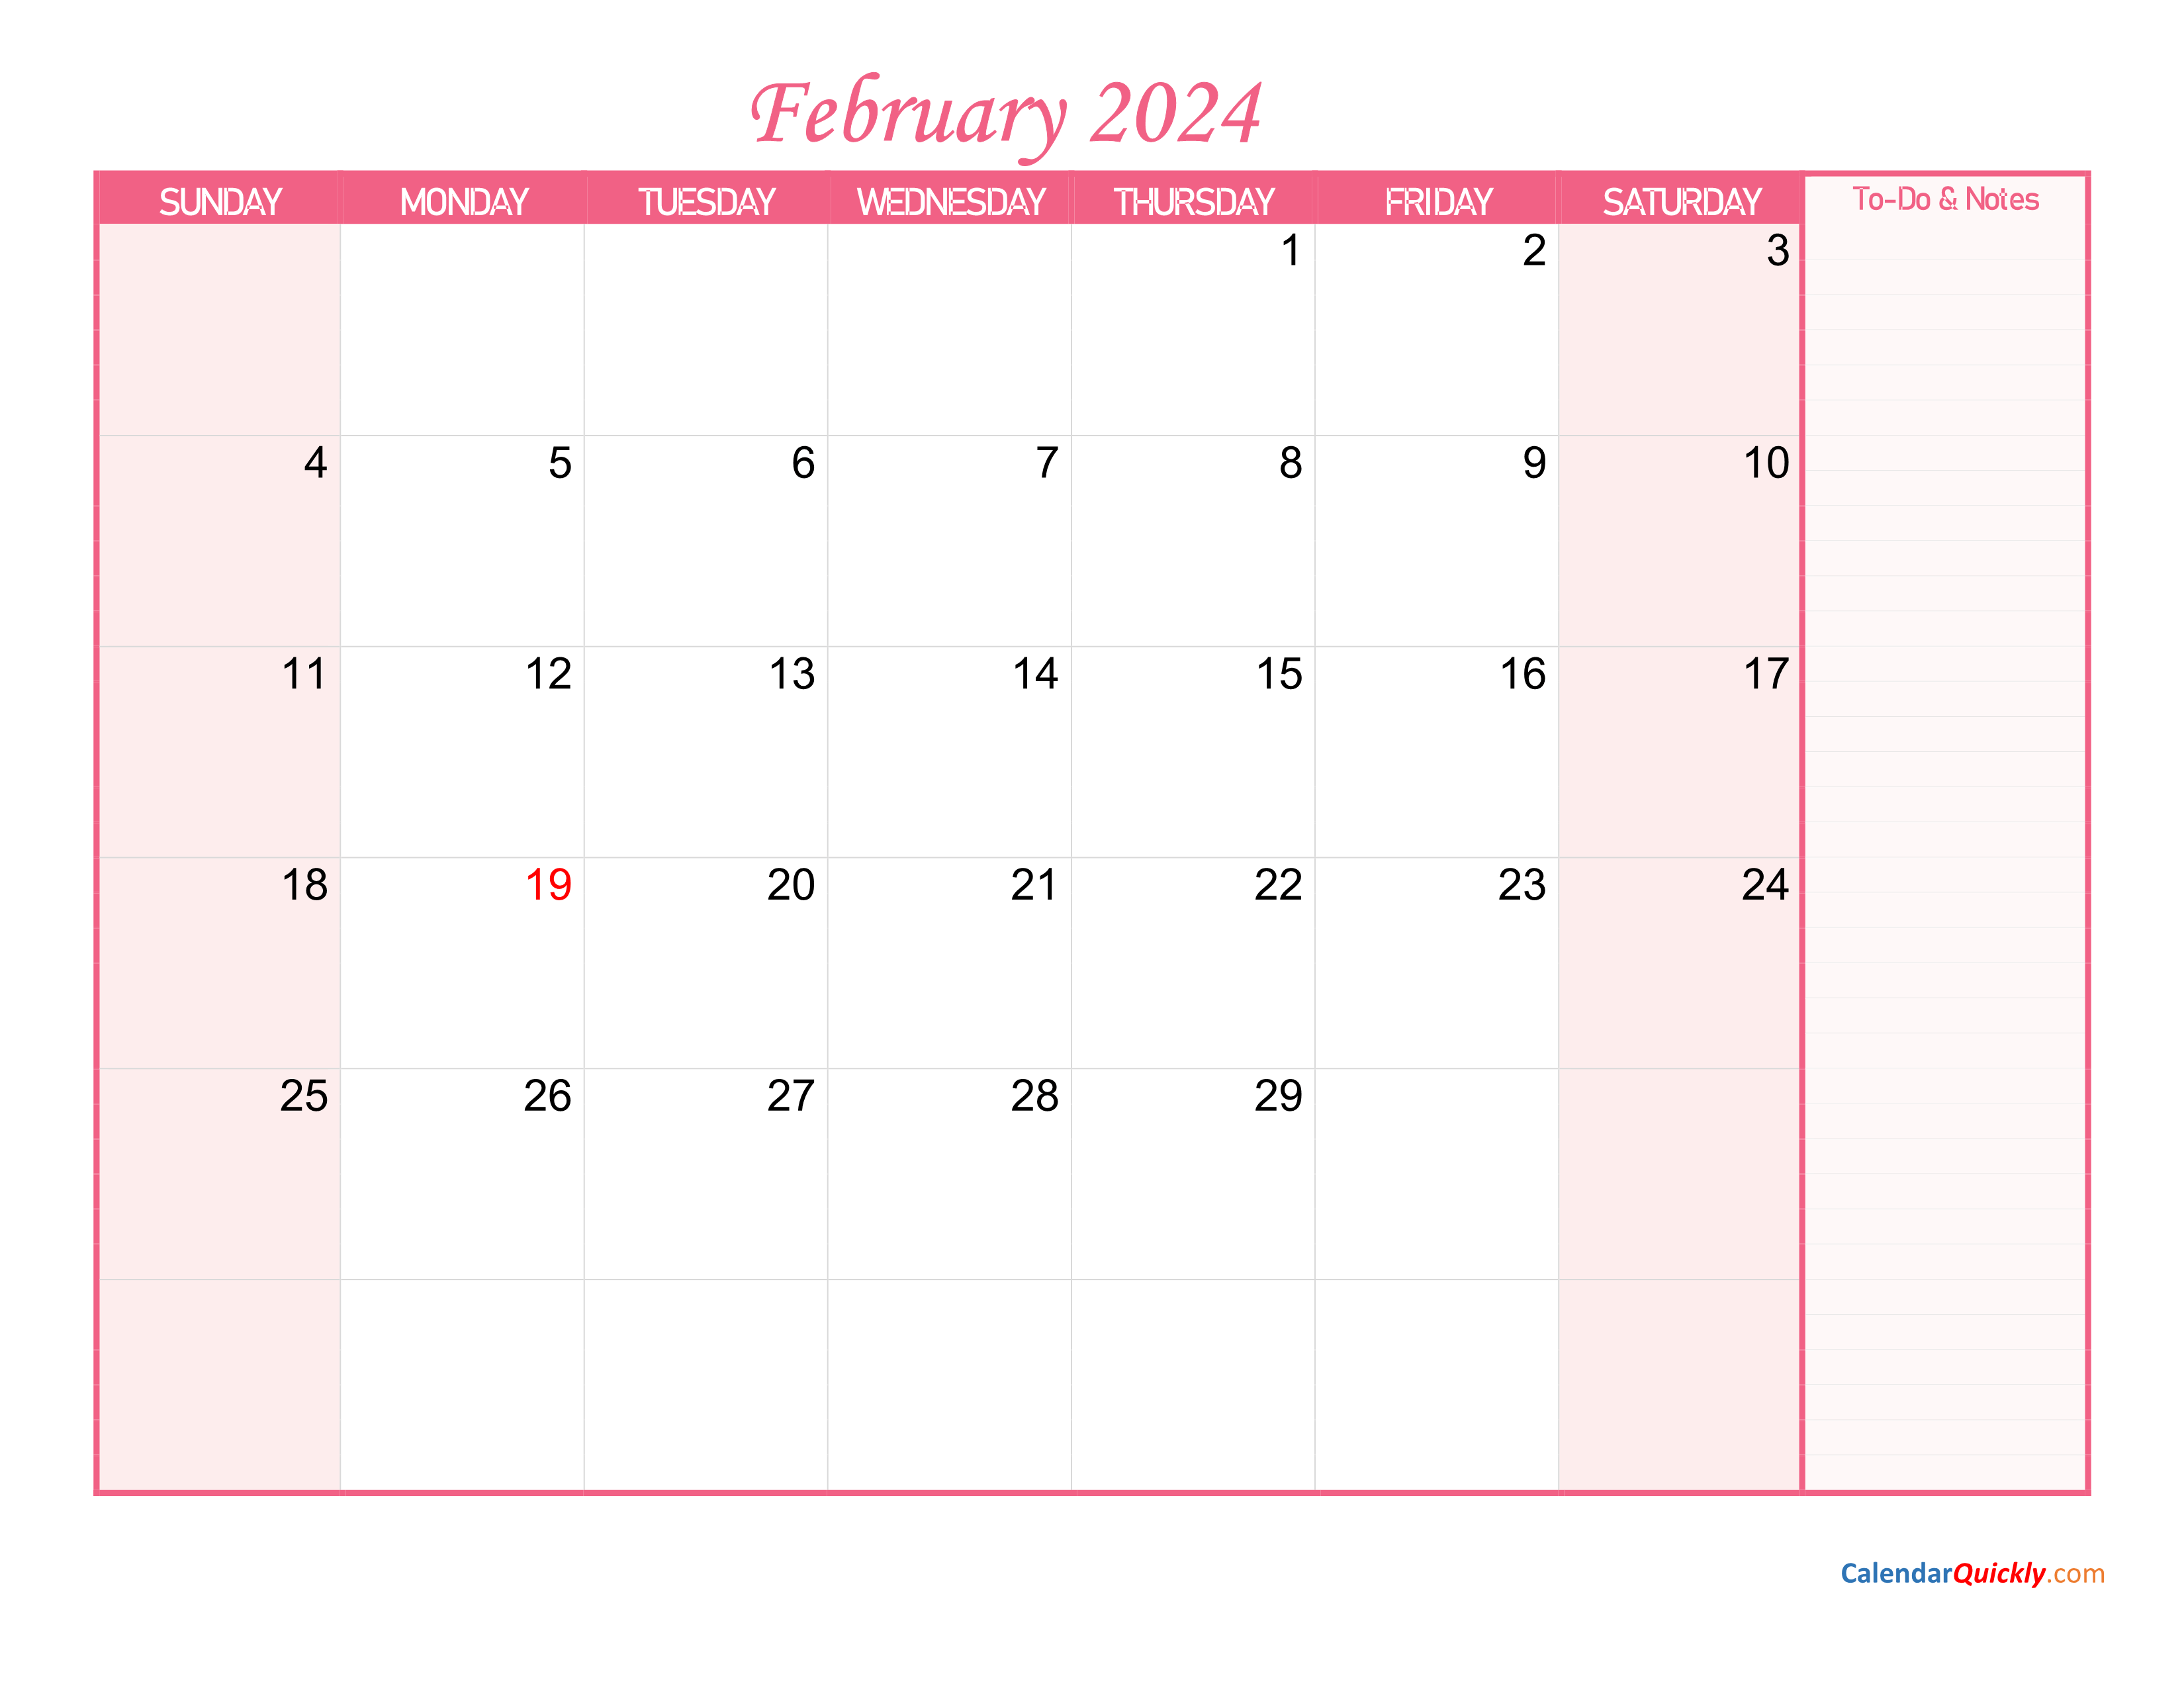 February Calendar 2024 with Notes | Calendar Quickly